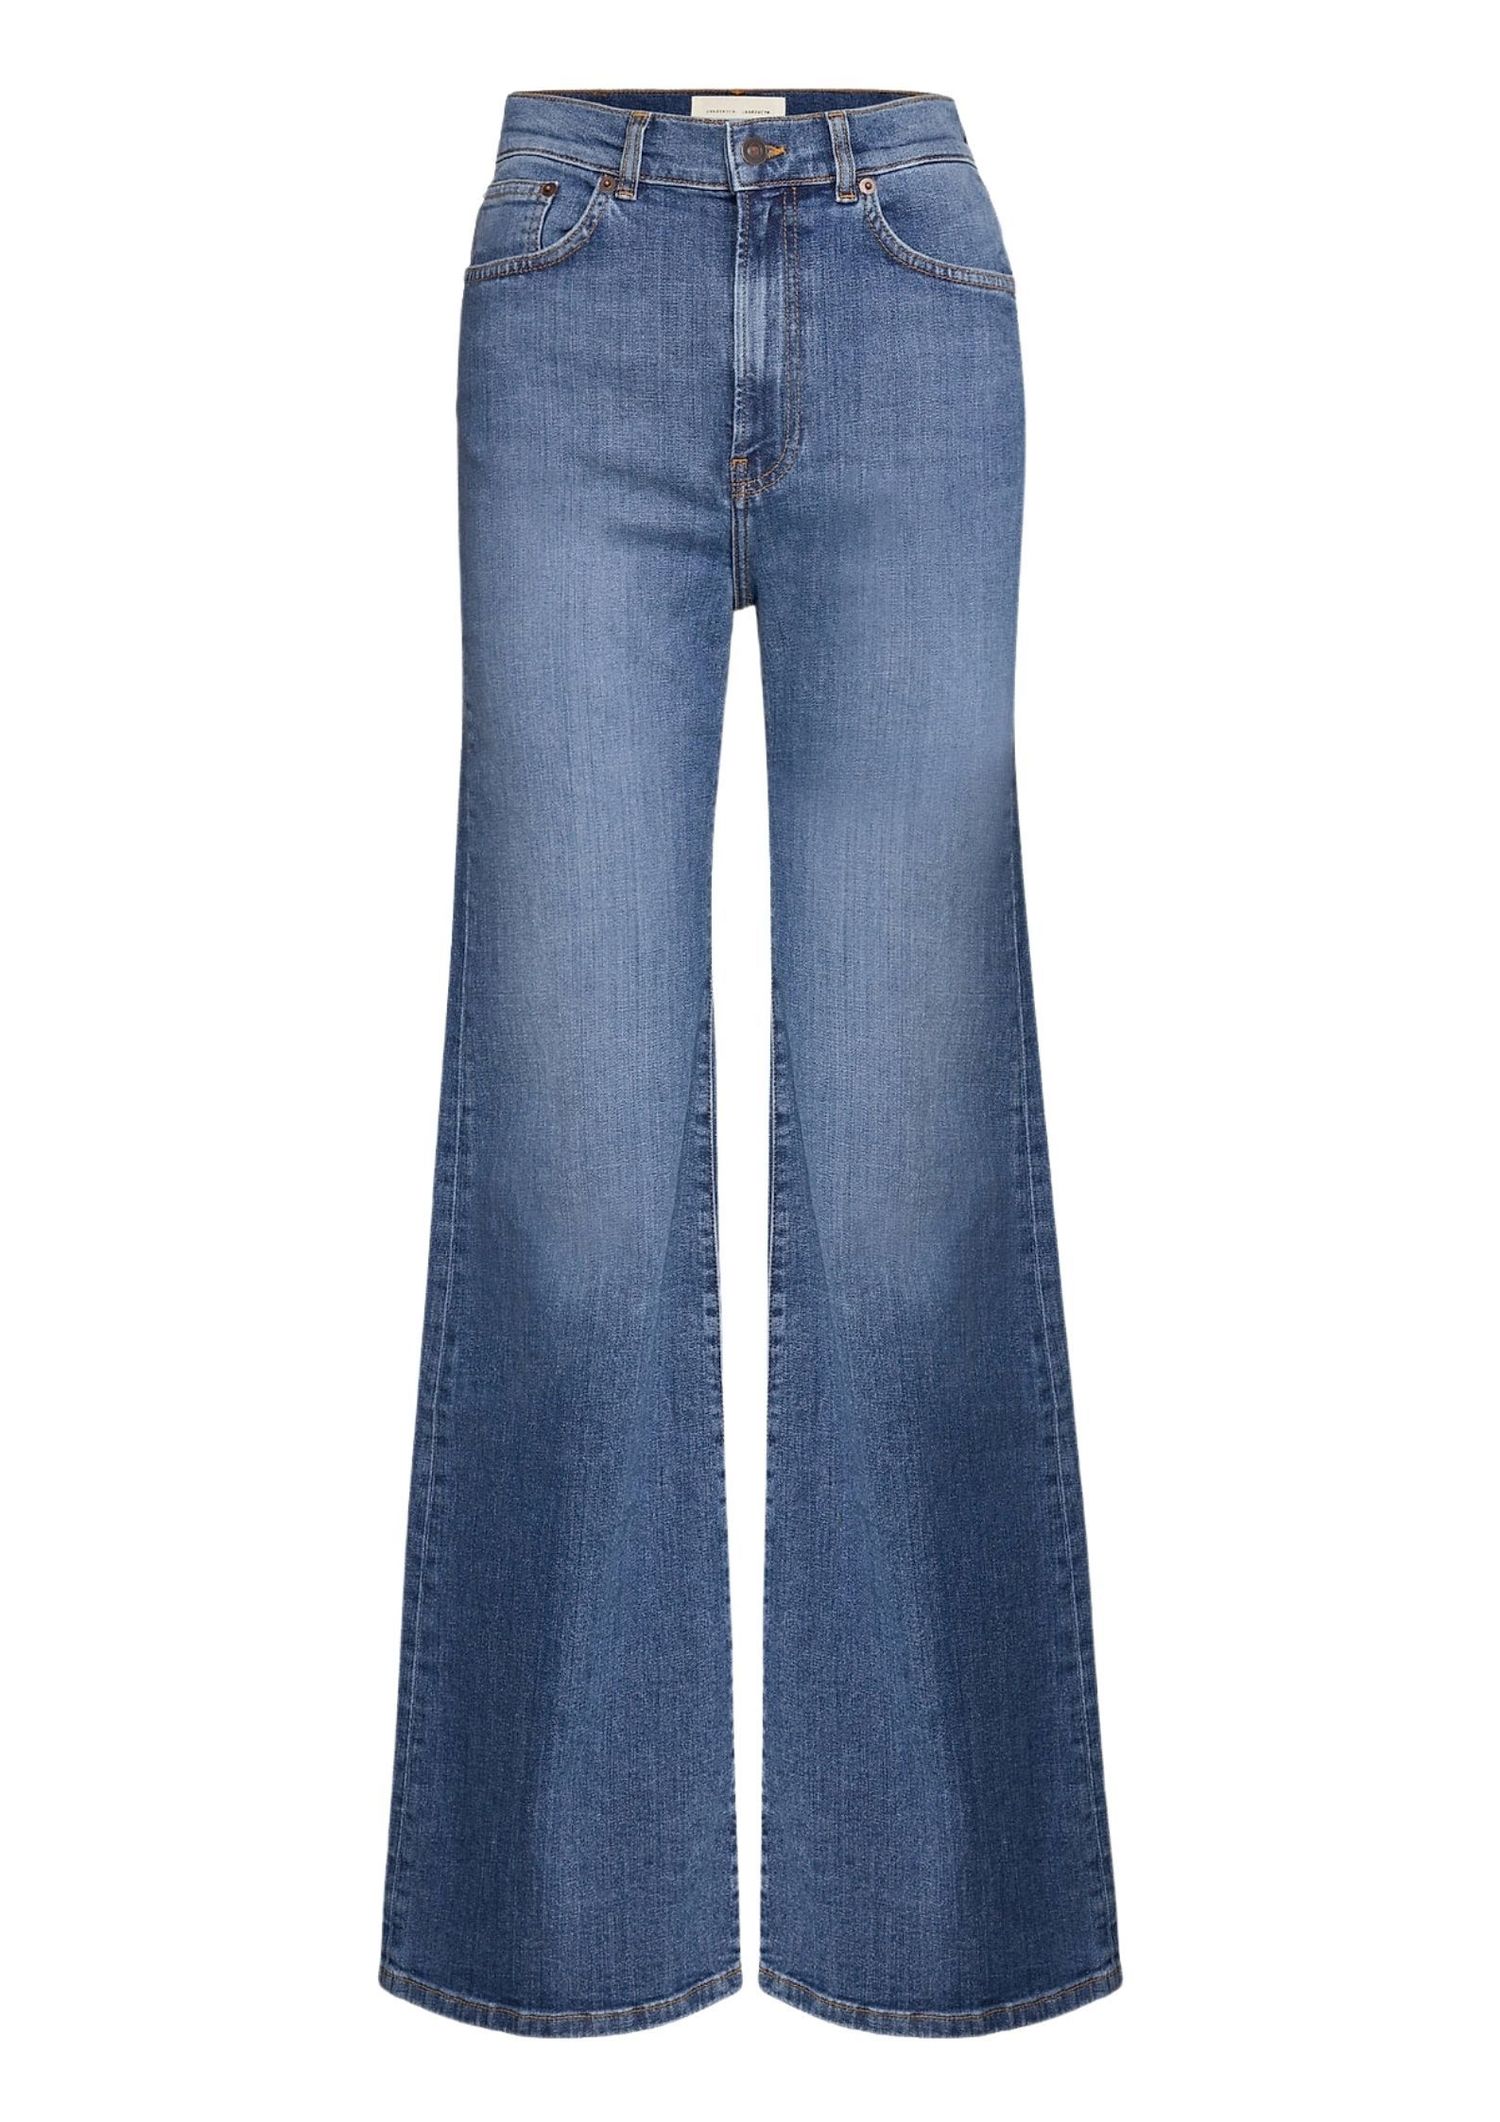 Tredive dannelse hjerte The 13 best denim jeans from Scandinavian brands to buy now - Vogue  Scandinavia